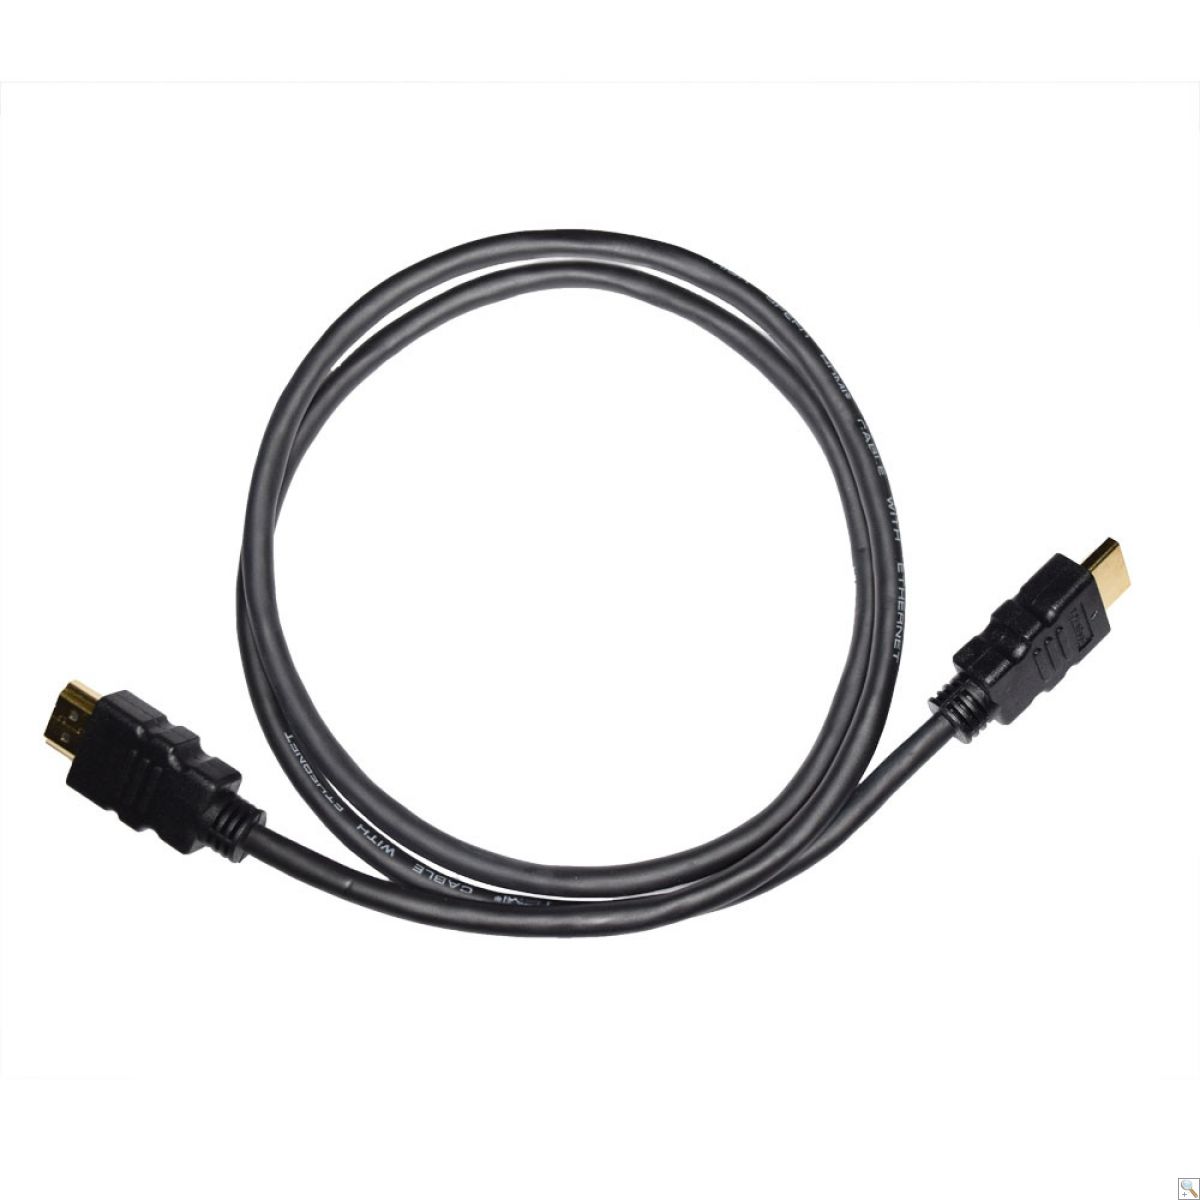 HDMI Cable - 1M